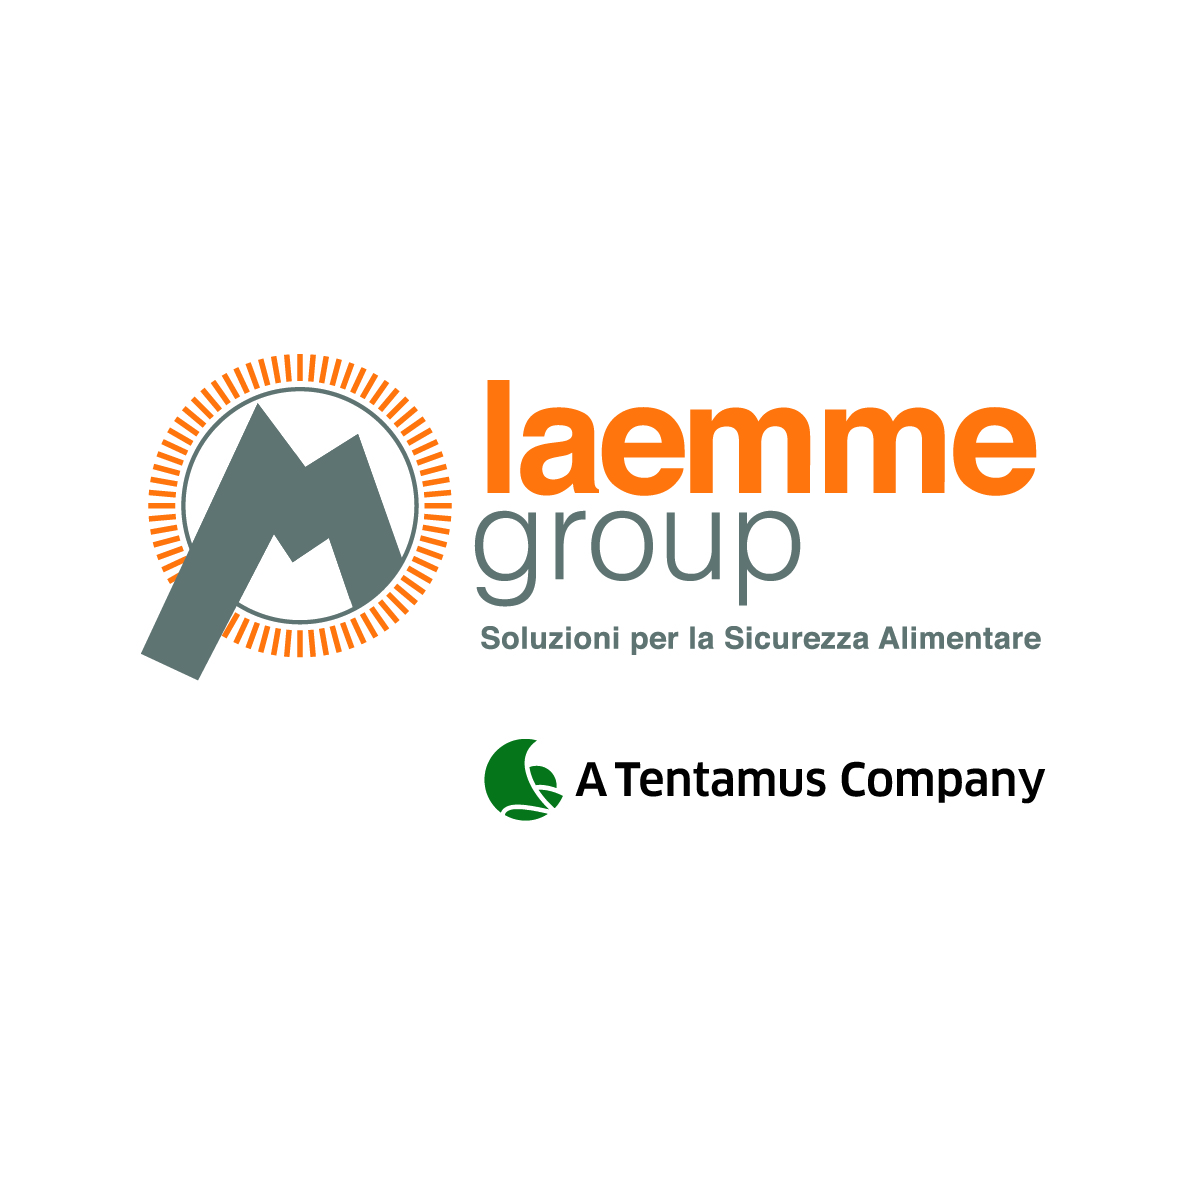 Laemmegroup - A Tentamus Company ricerca SARS-CoV2 su tamponi di superficie